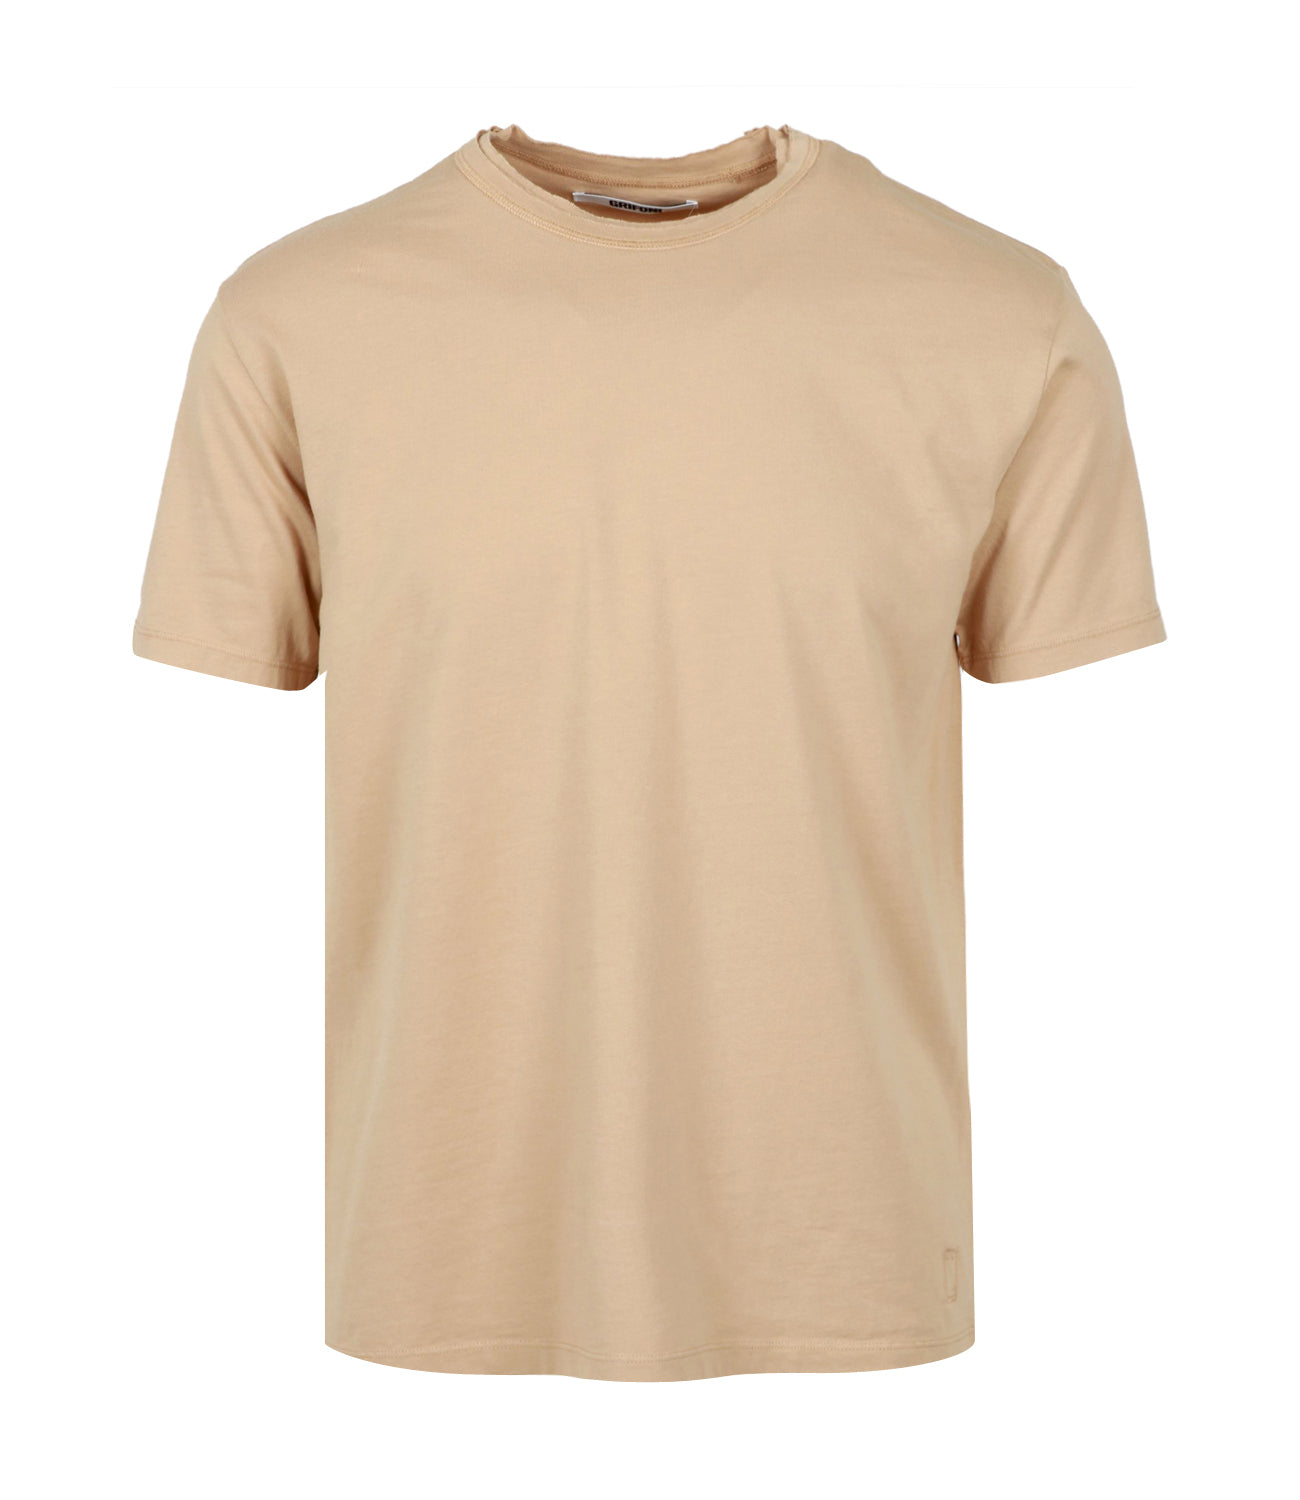 Grifoni | T-Shirt Beige Deserto